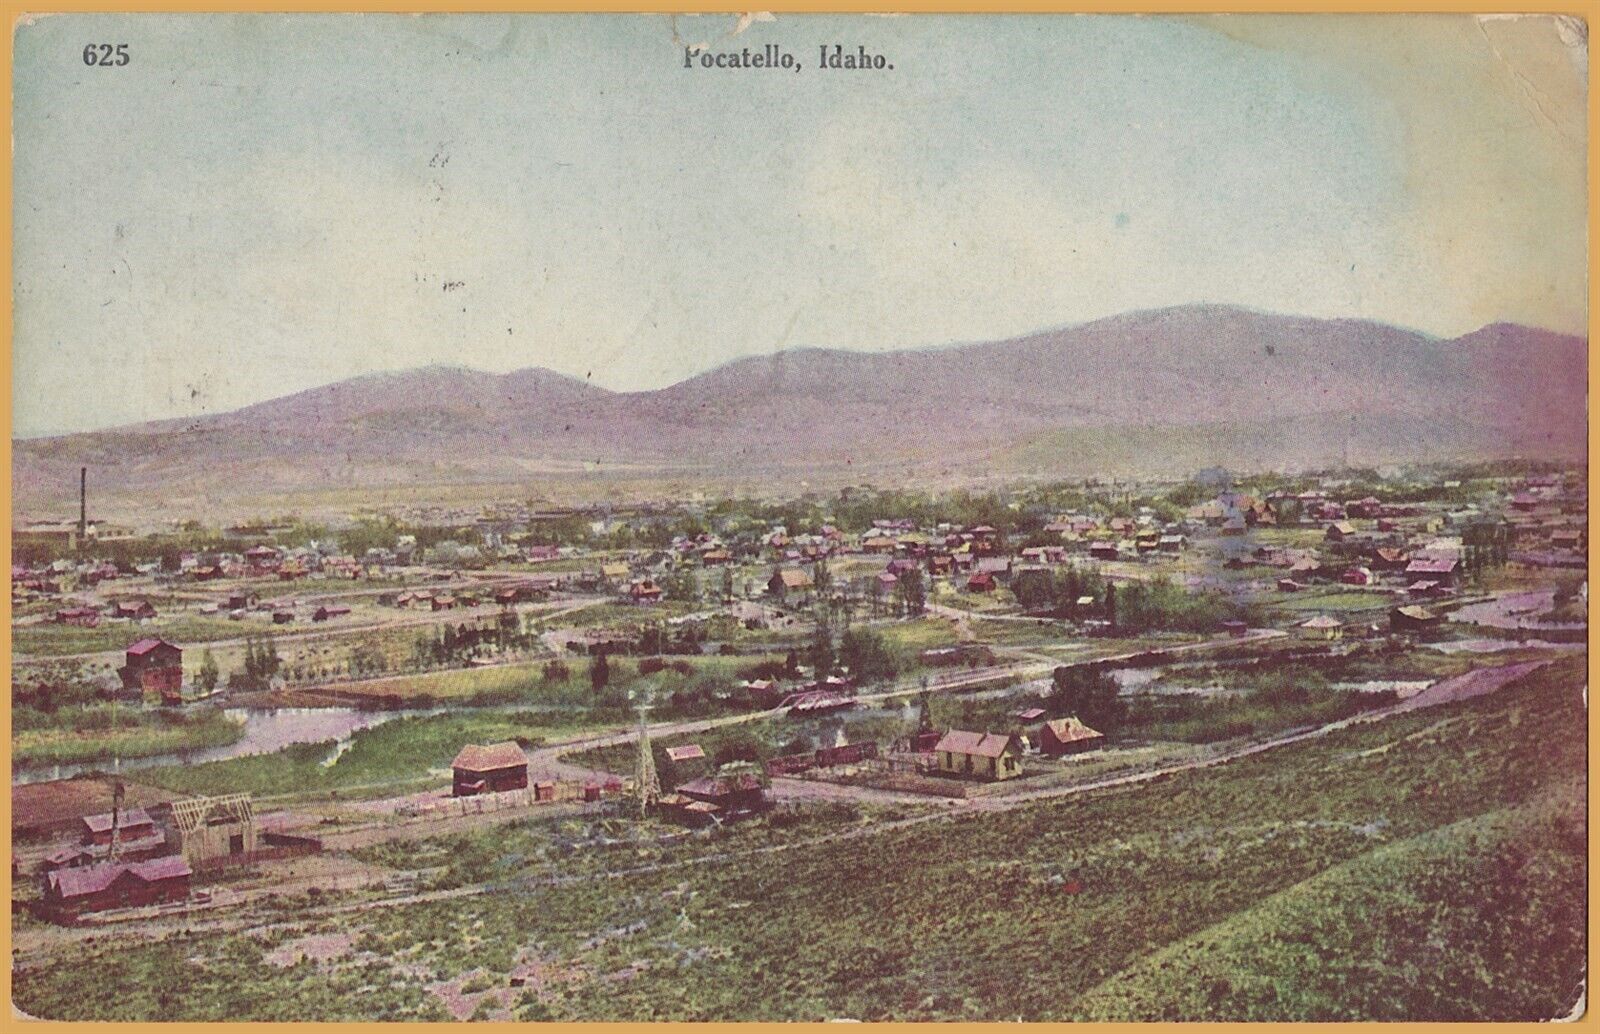 Pocatello, Idaho, View from the Hills - 1909 RPO cancel